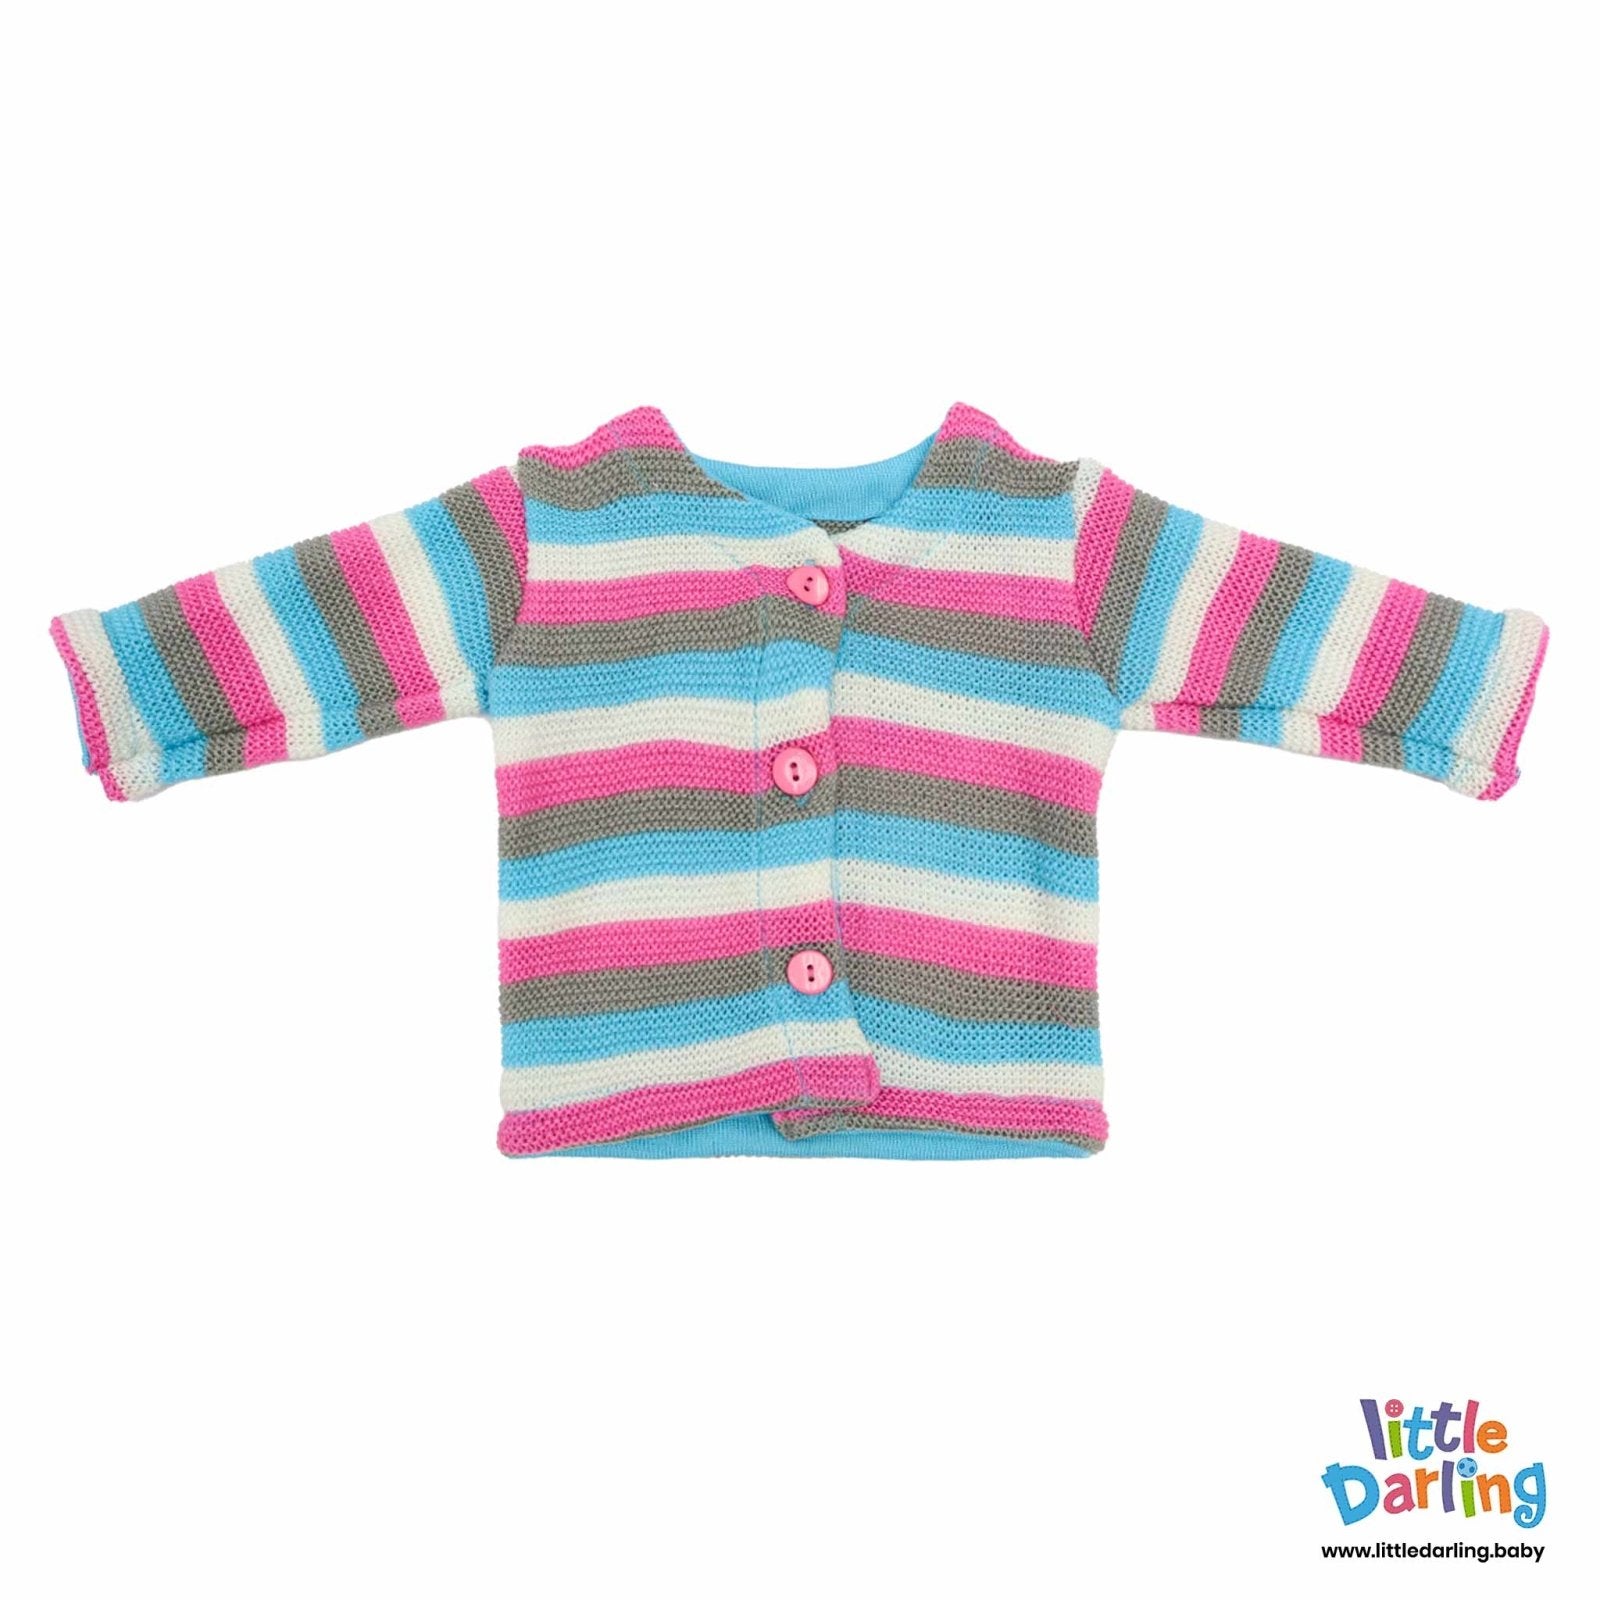 4 Pcs Woolen Gift Set Blue & Pink Stripes by Little Darling